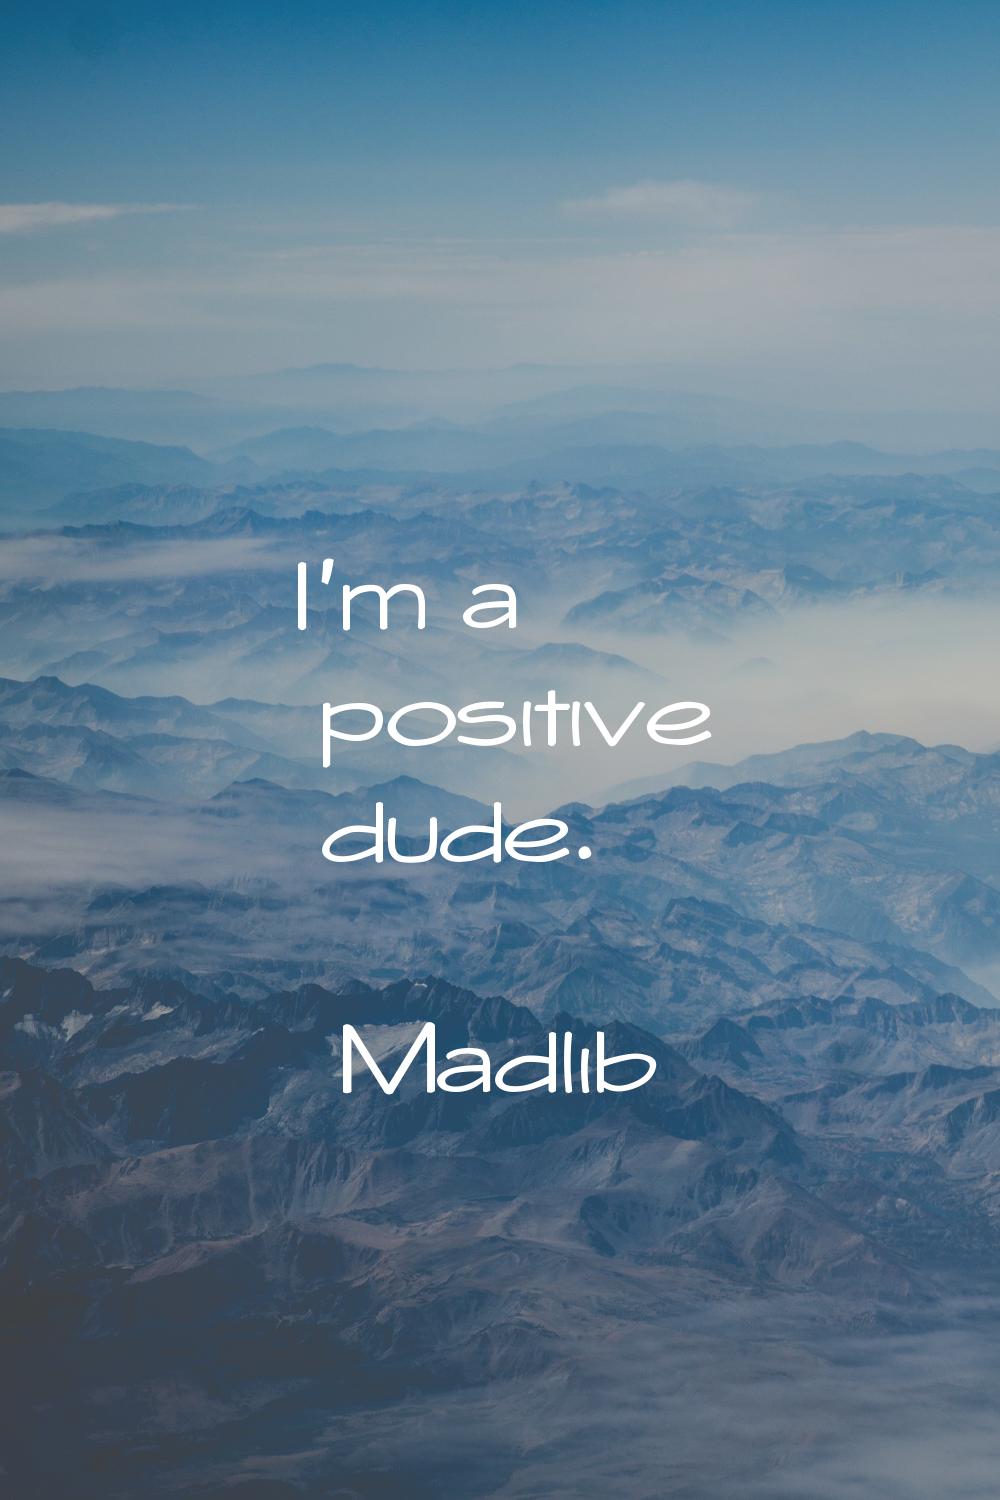 I'm a positive dude.